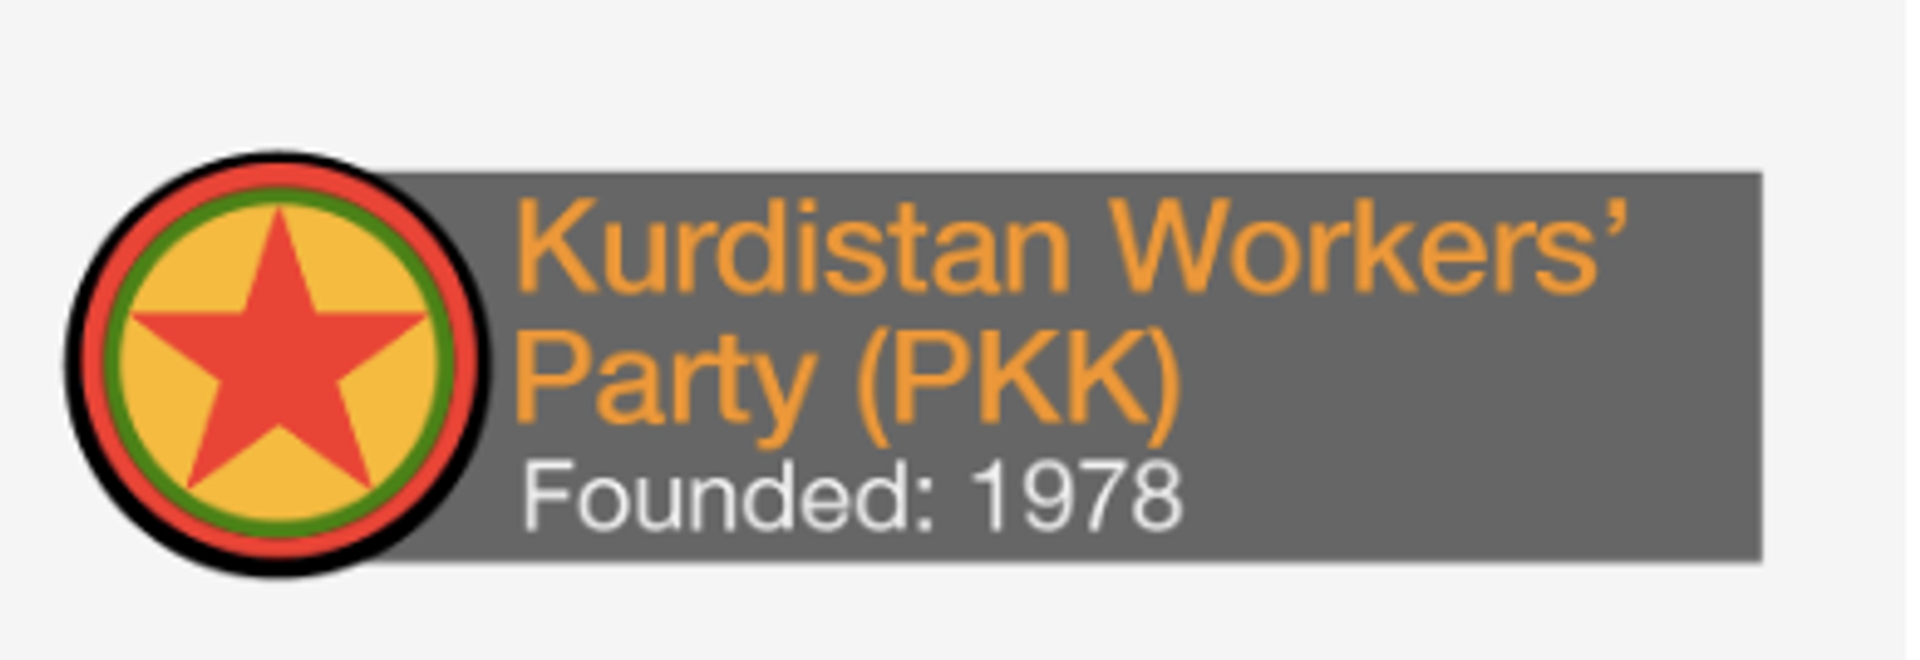 De PKK